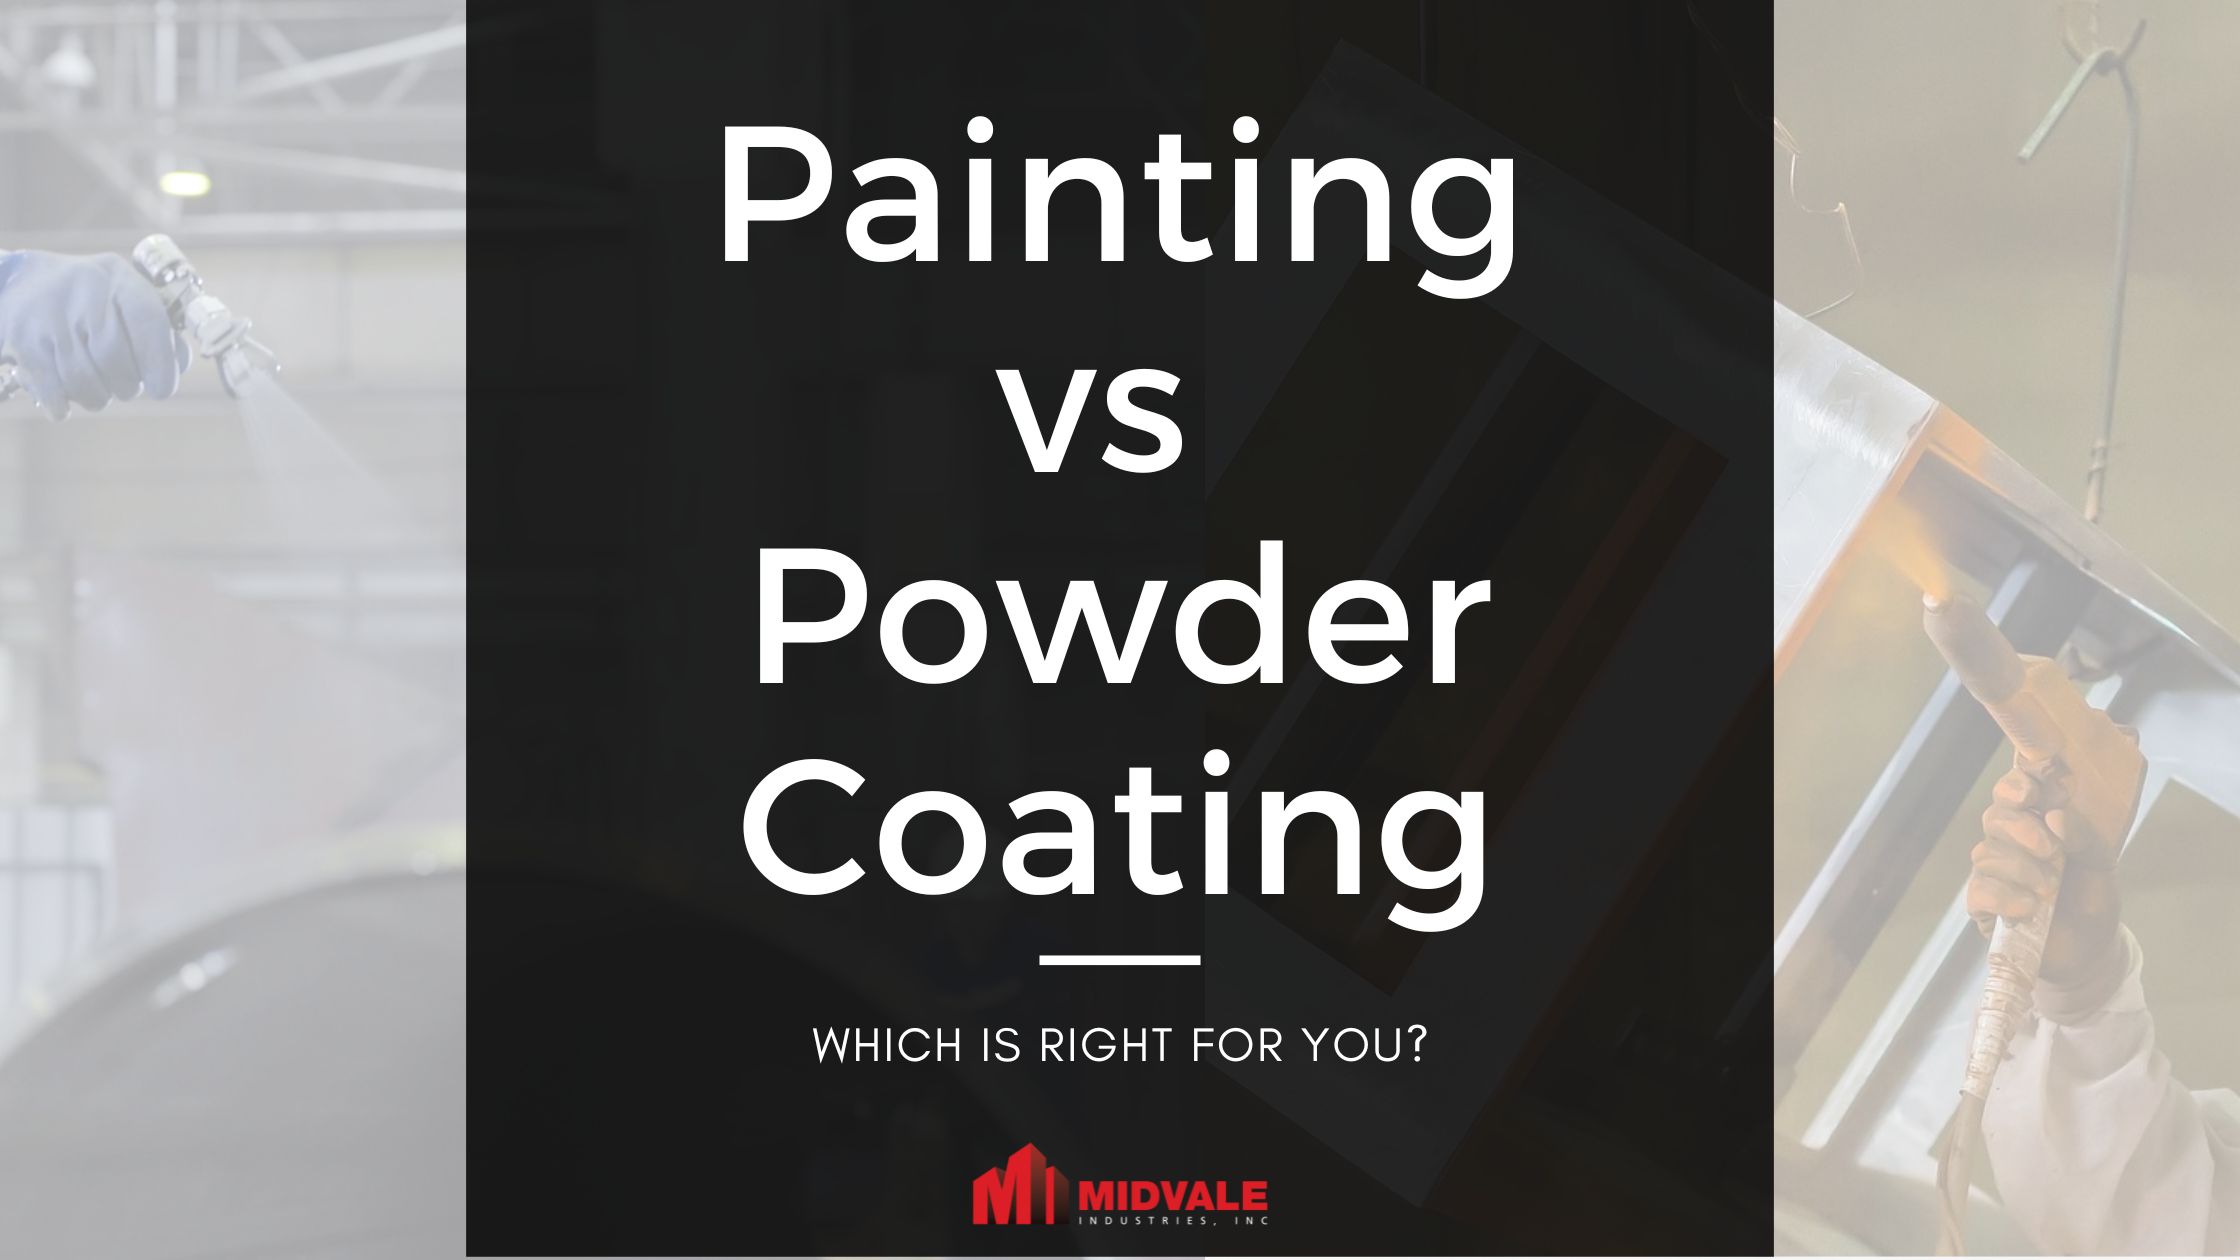 Painting vs Powder Coating